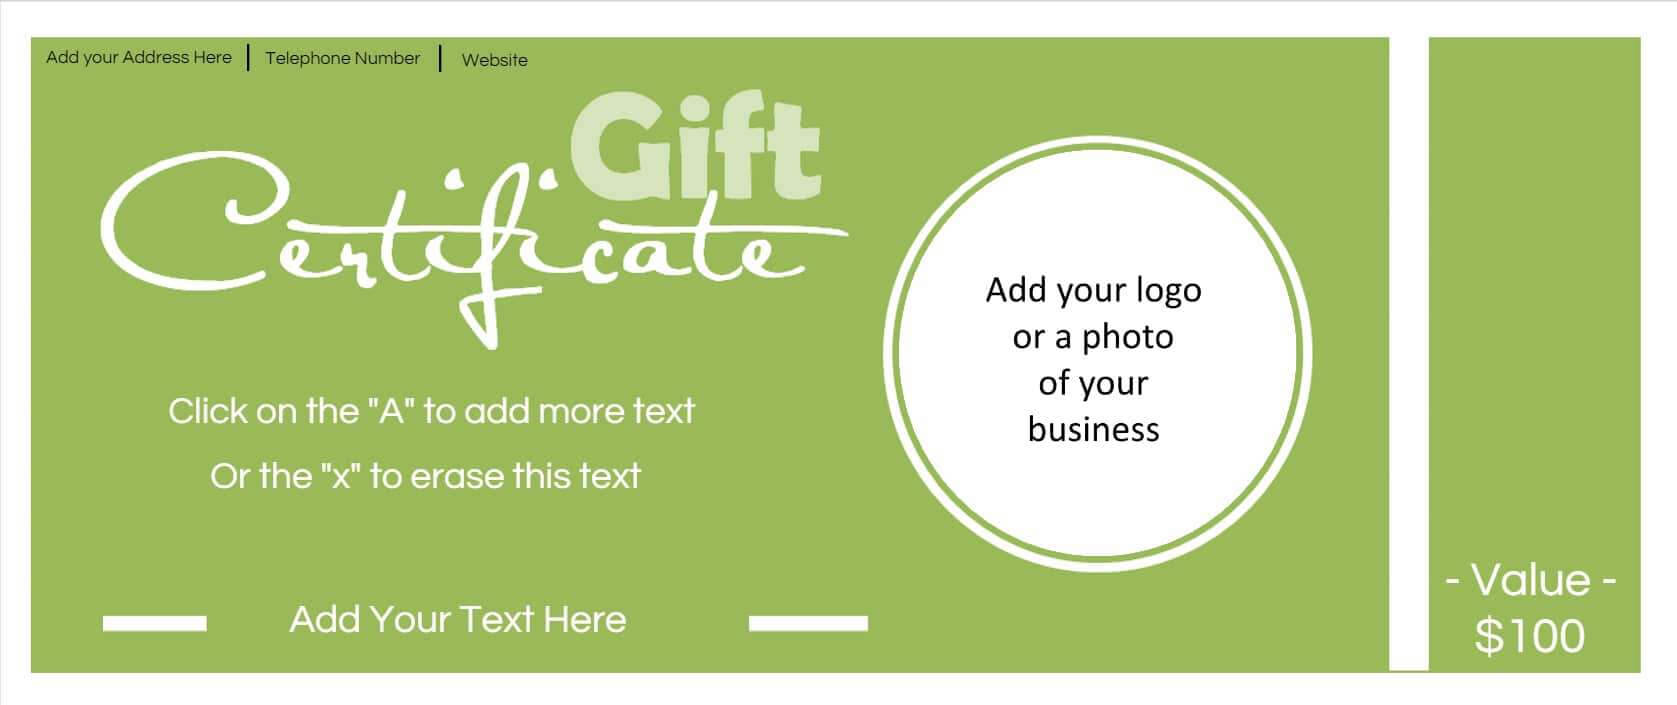 Gift Certificate Template With Logo Regarding Company Gift Certificate Template